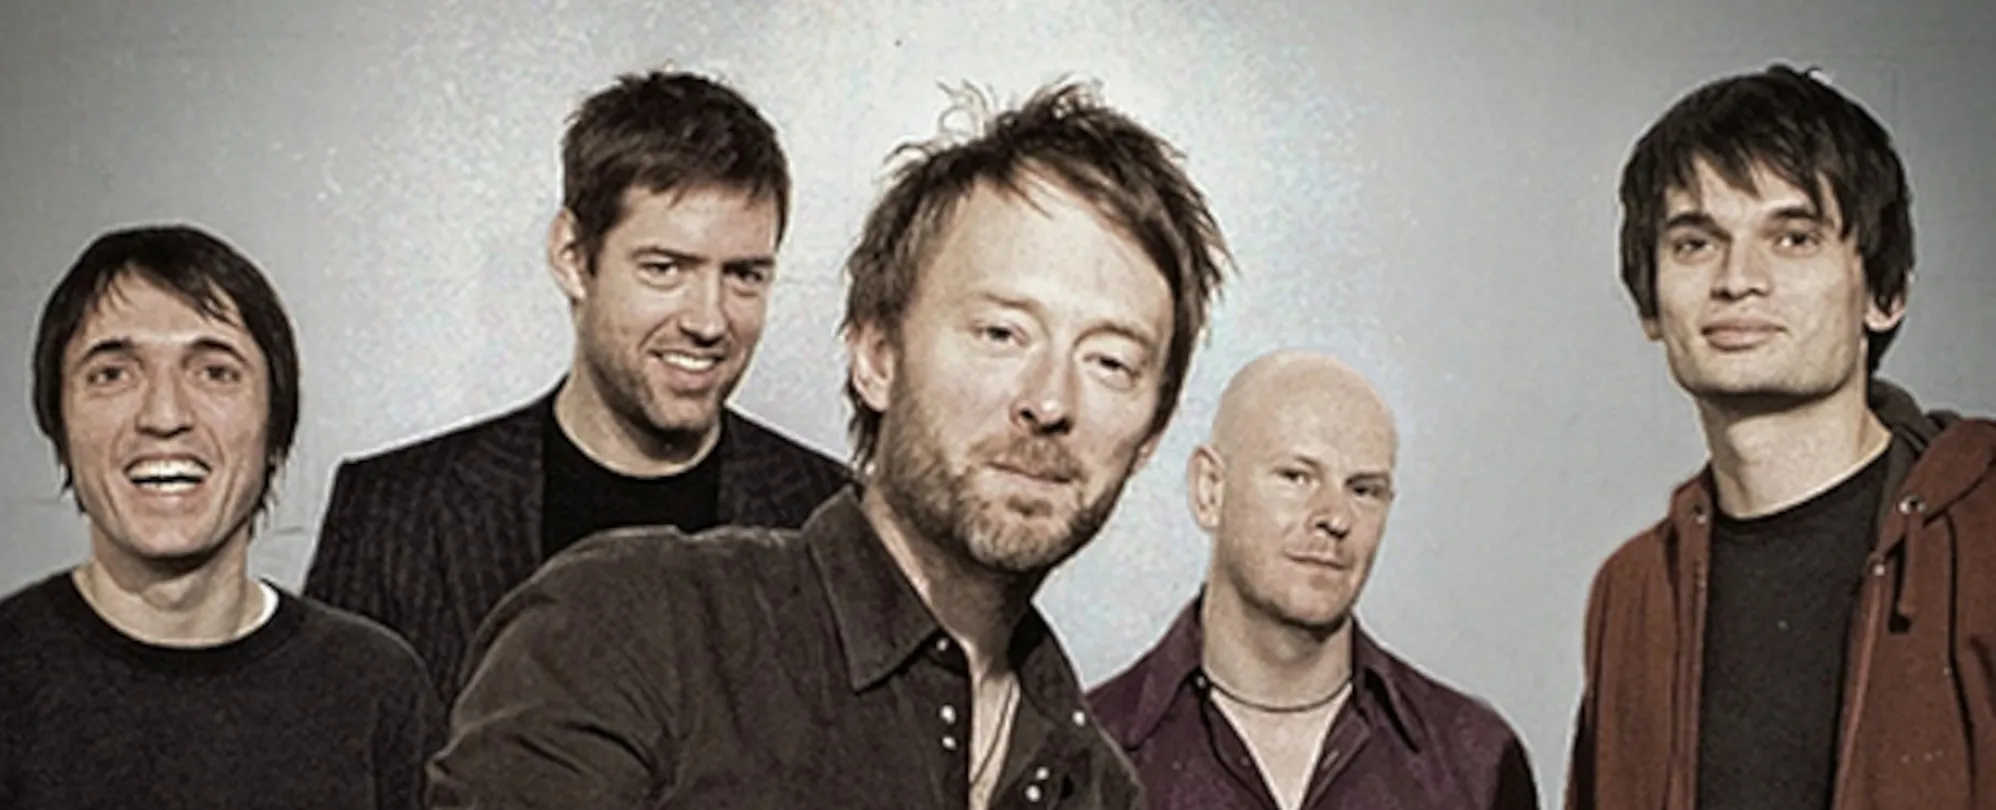 Happy Birthday Thom Yorke: Radiohead’s Top 10 Songs